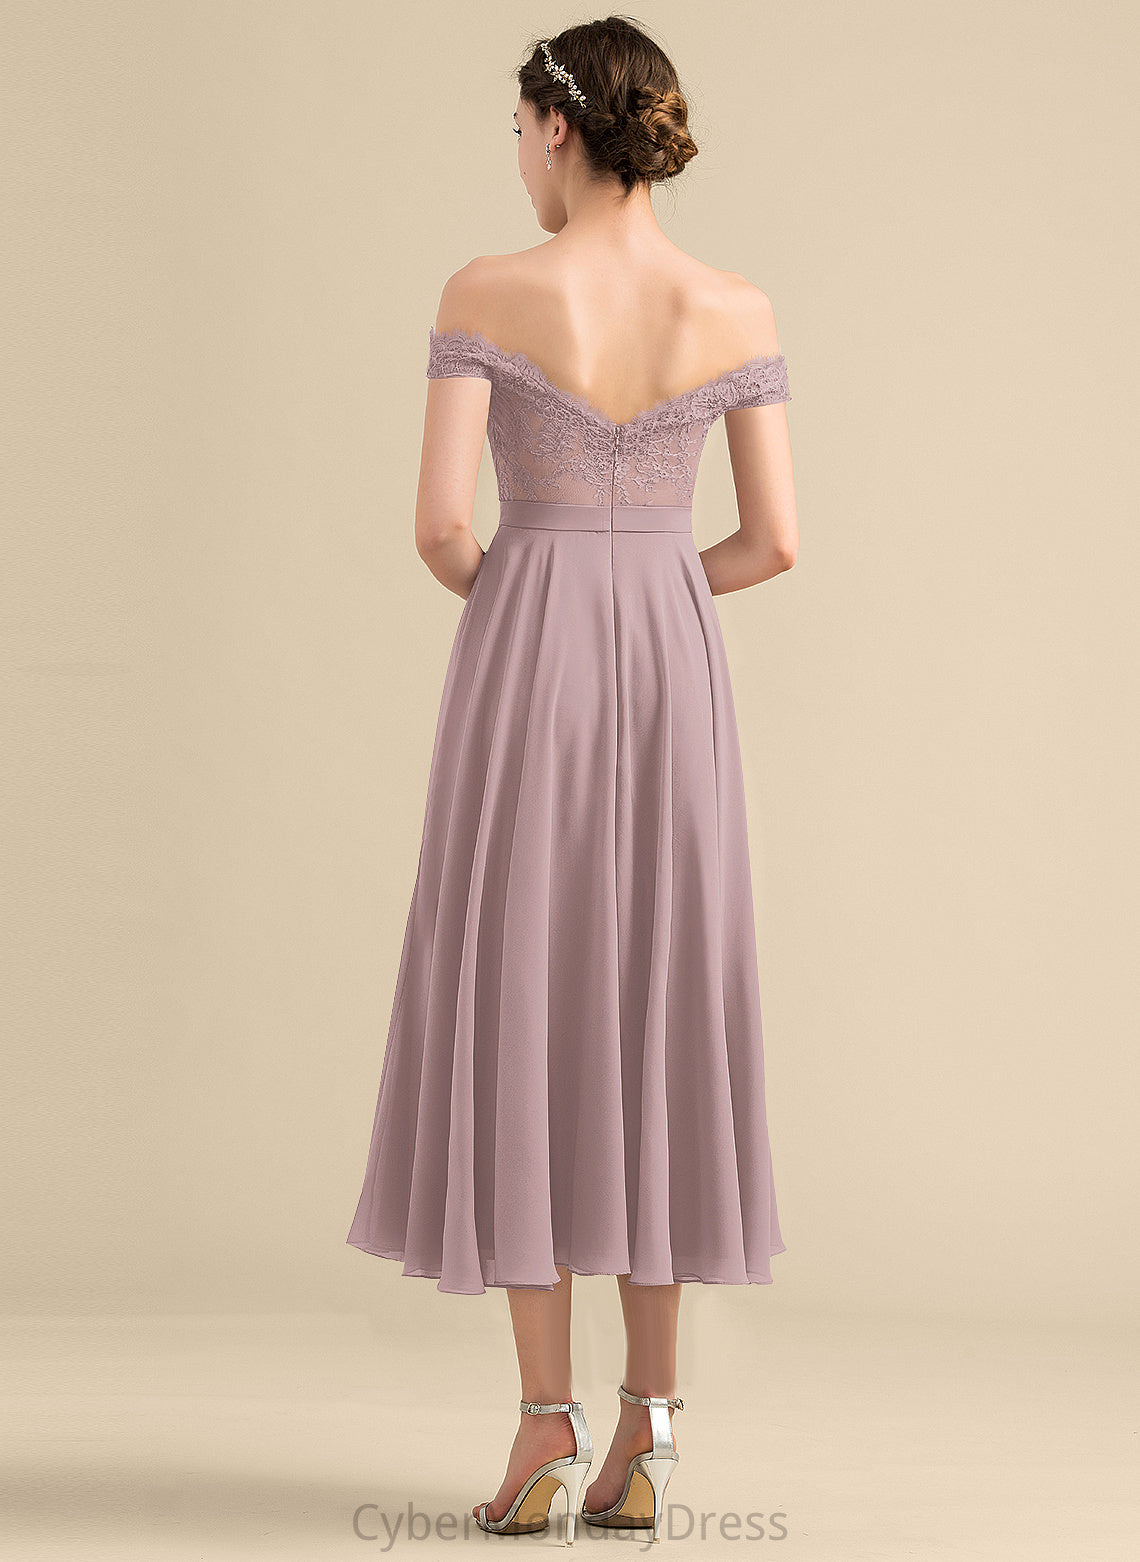 Silhouette Neckline Length A-Line Beading Tea-Length Fabric Off-the-Shoulder Embellishment Aaliyah Sleeveless Floor Length Bridesmaid Dresses